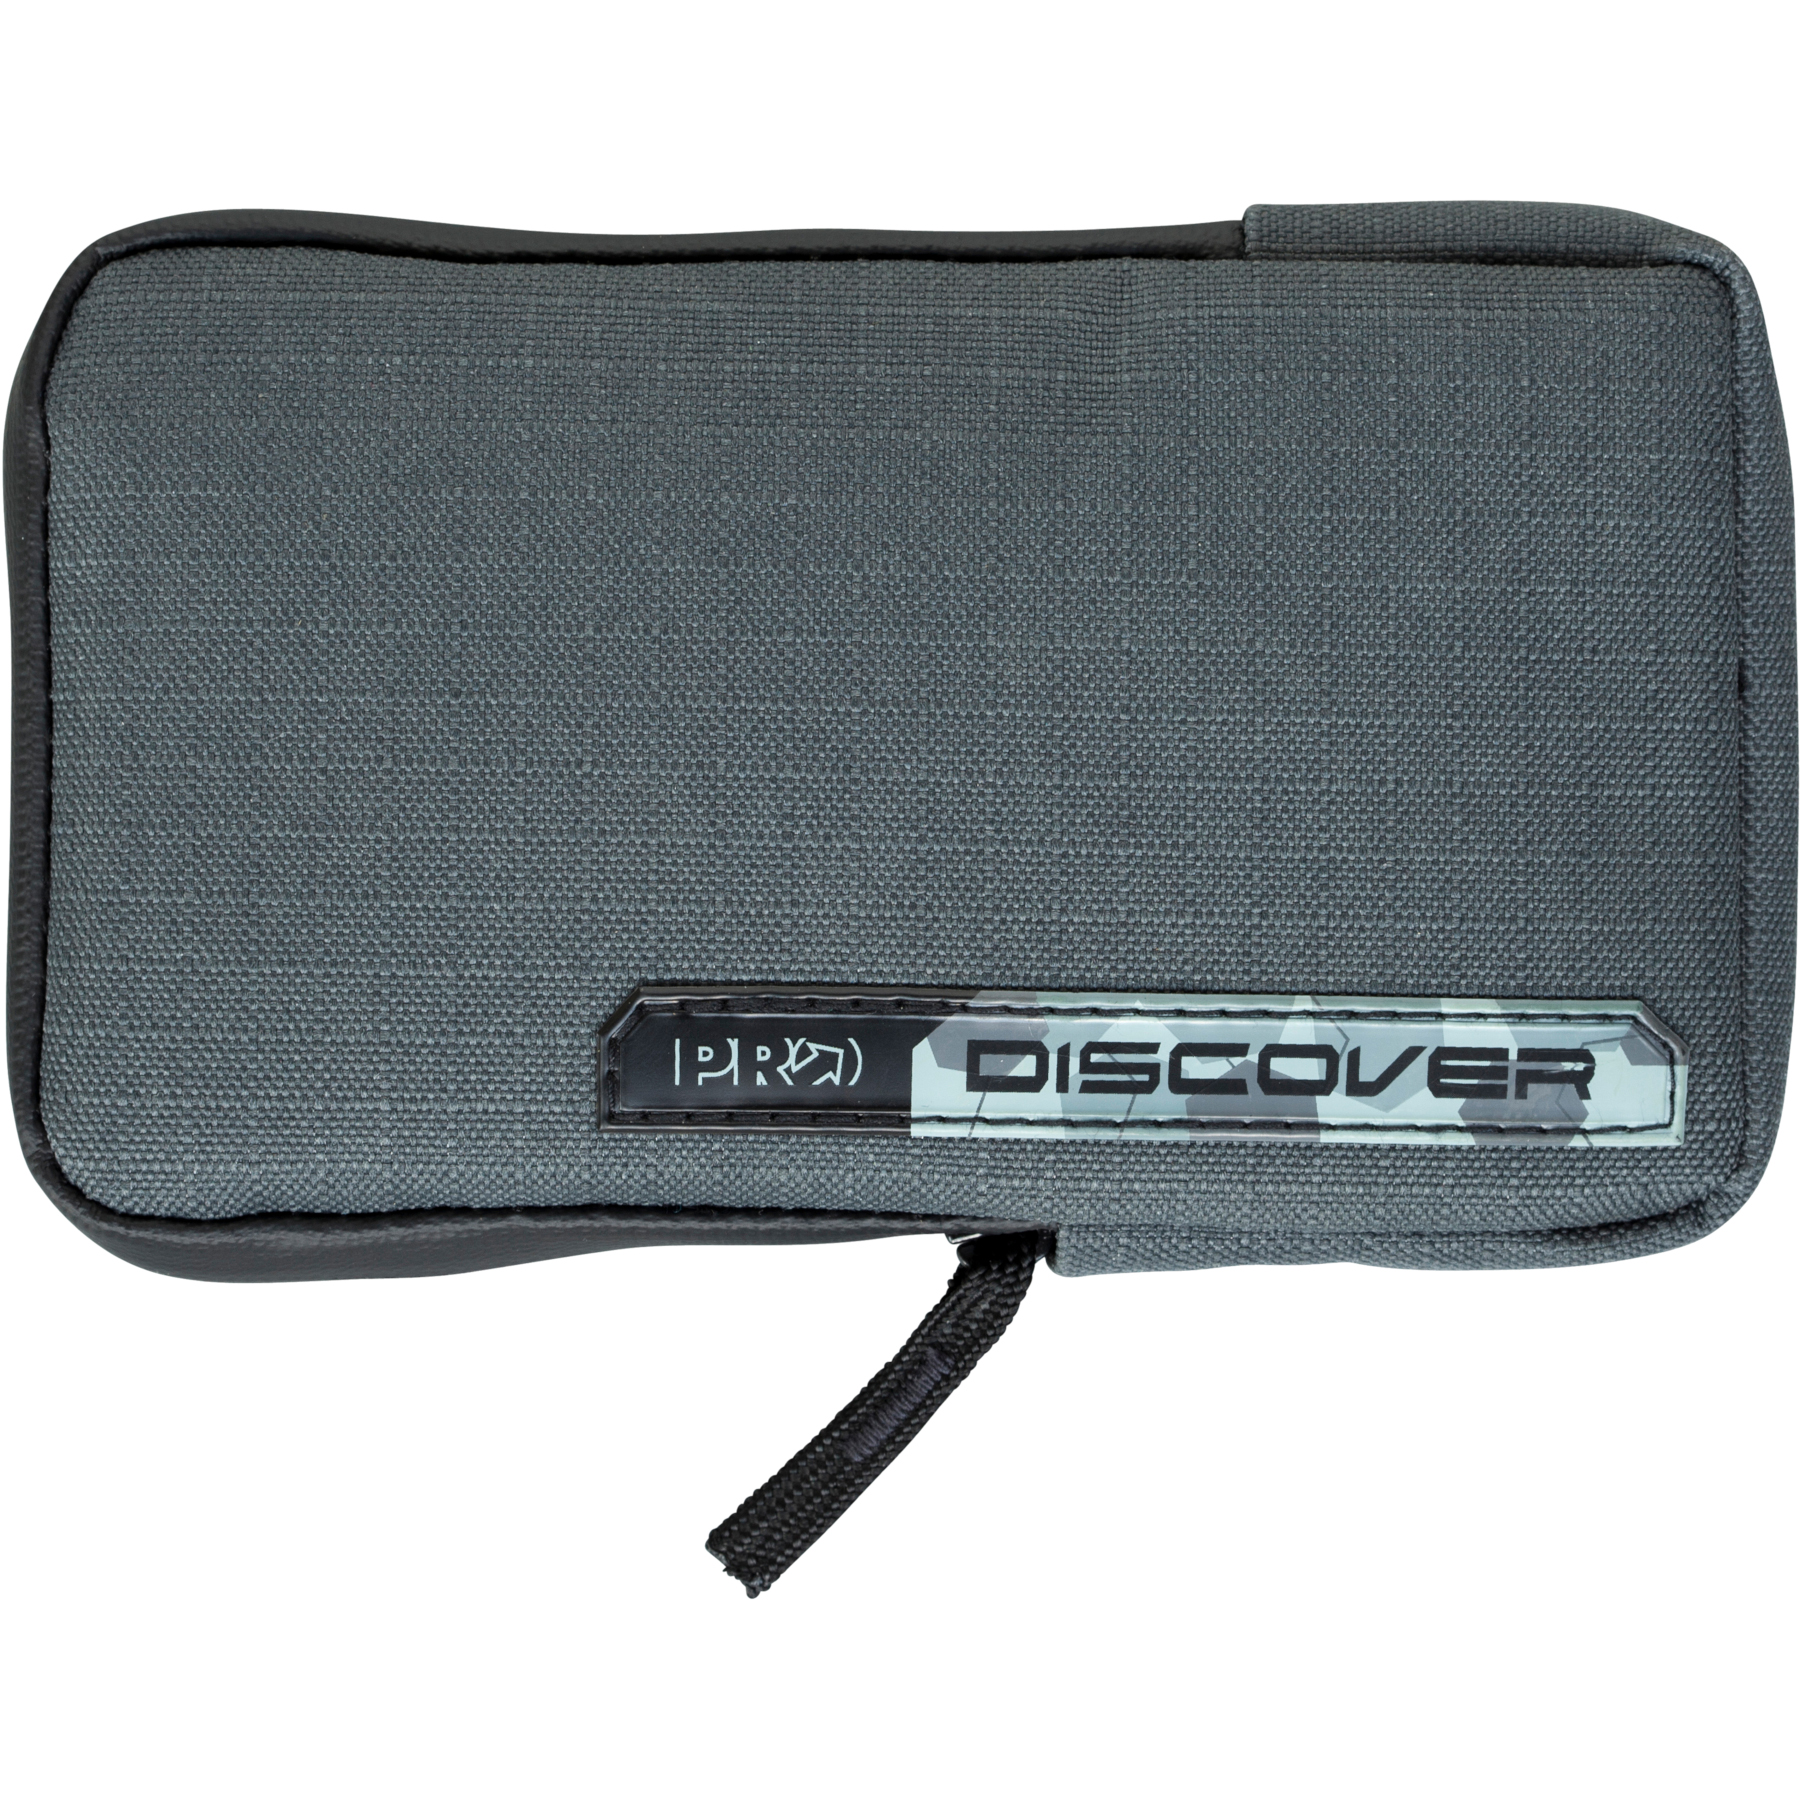 Productfoto van PRO Discover Mobile Phone Bag - Waterproof - grey